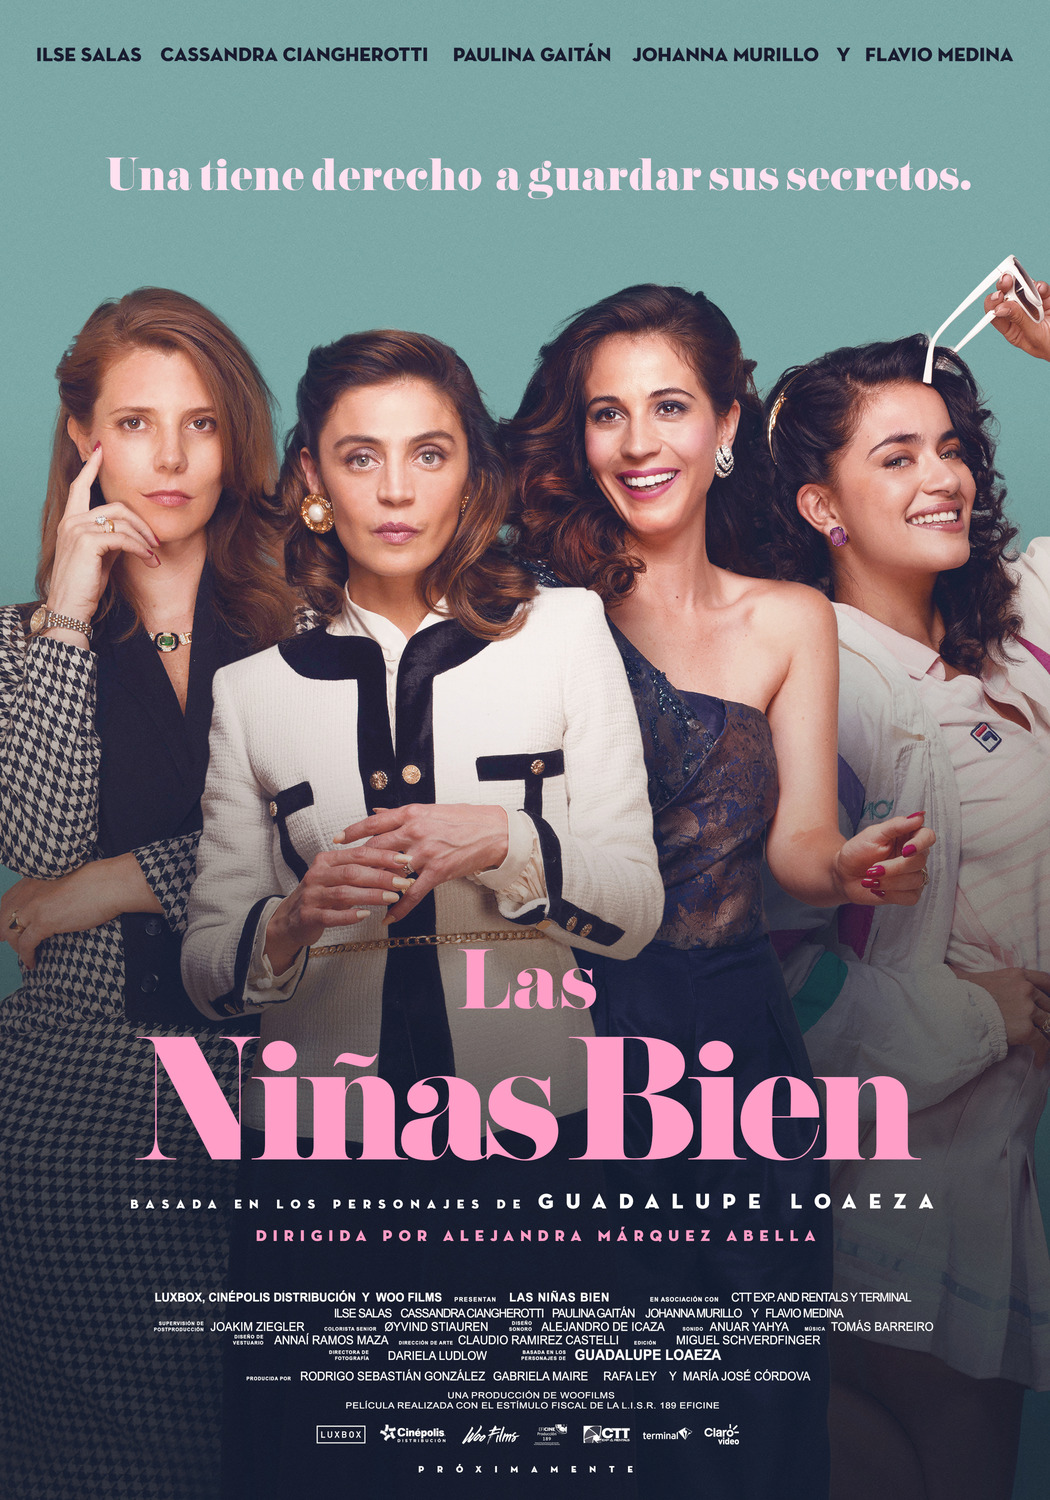 Extra Large Movie Poster Image for Las niñas bien (#3 of 16)